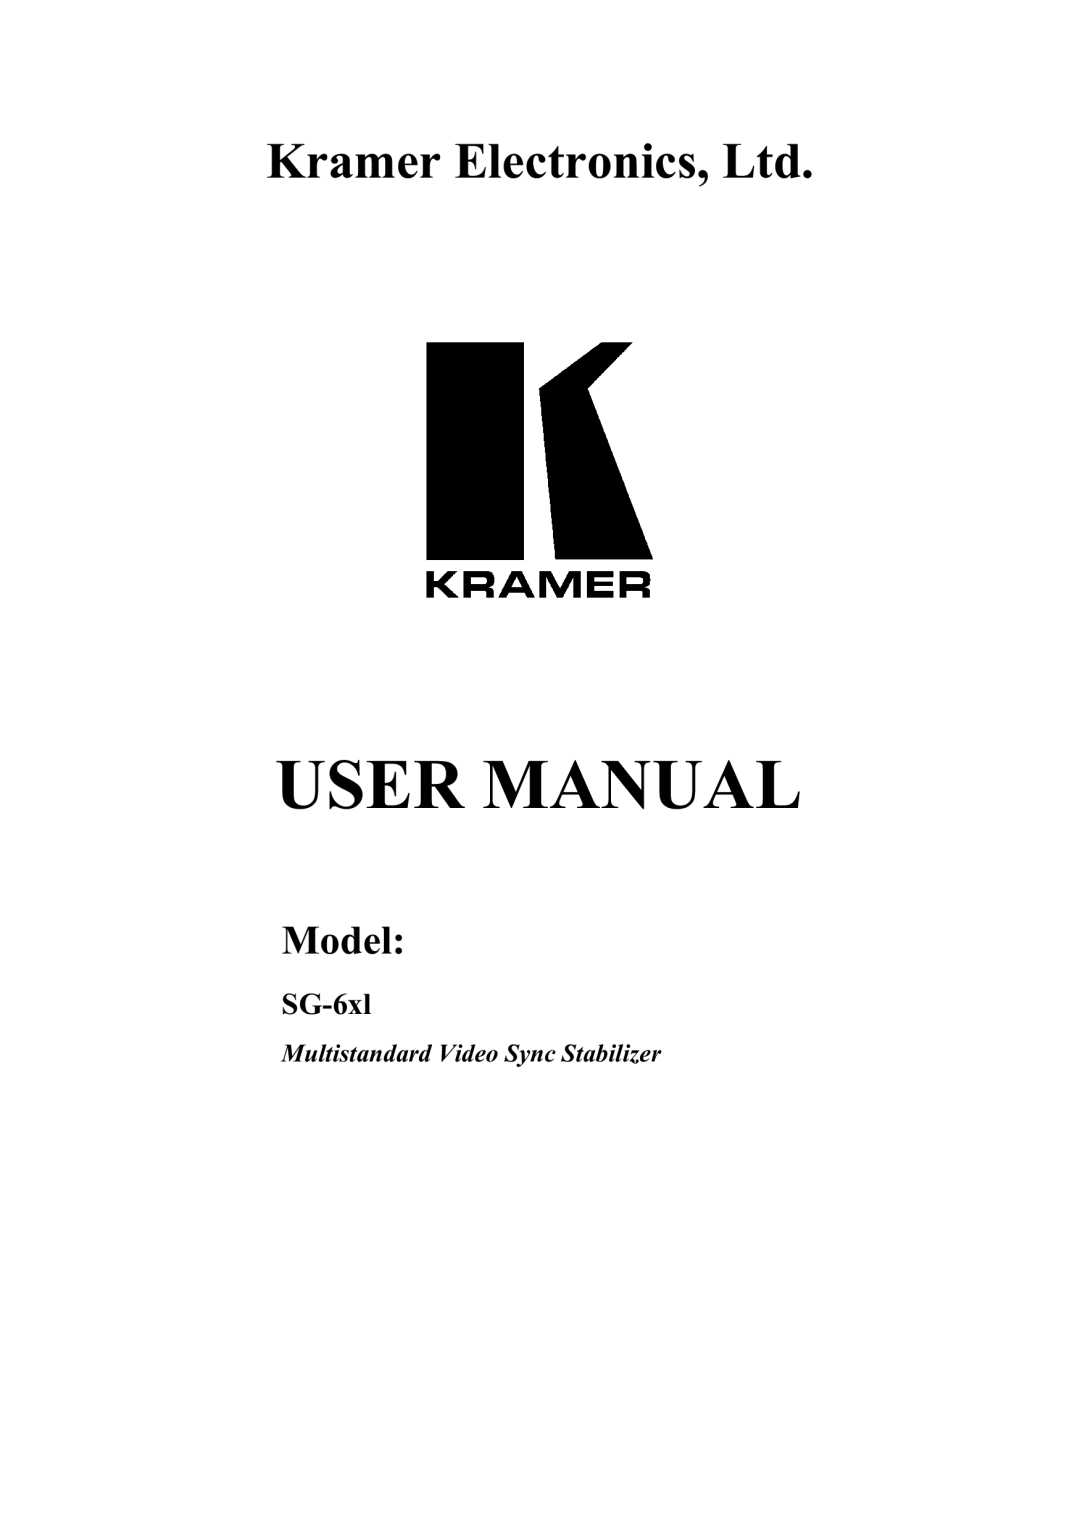 Kramer Electronics 6X1 manual 0XOWLVWDQGDUG9LGHR6\QF6WDELOLHU, 8650$18$, Udphuohfwurqlfv/Wg, 0RGHO 